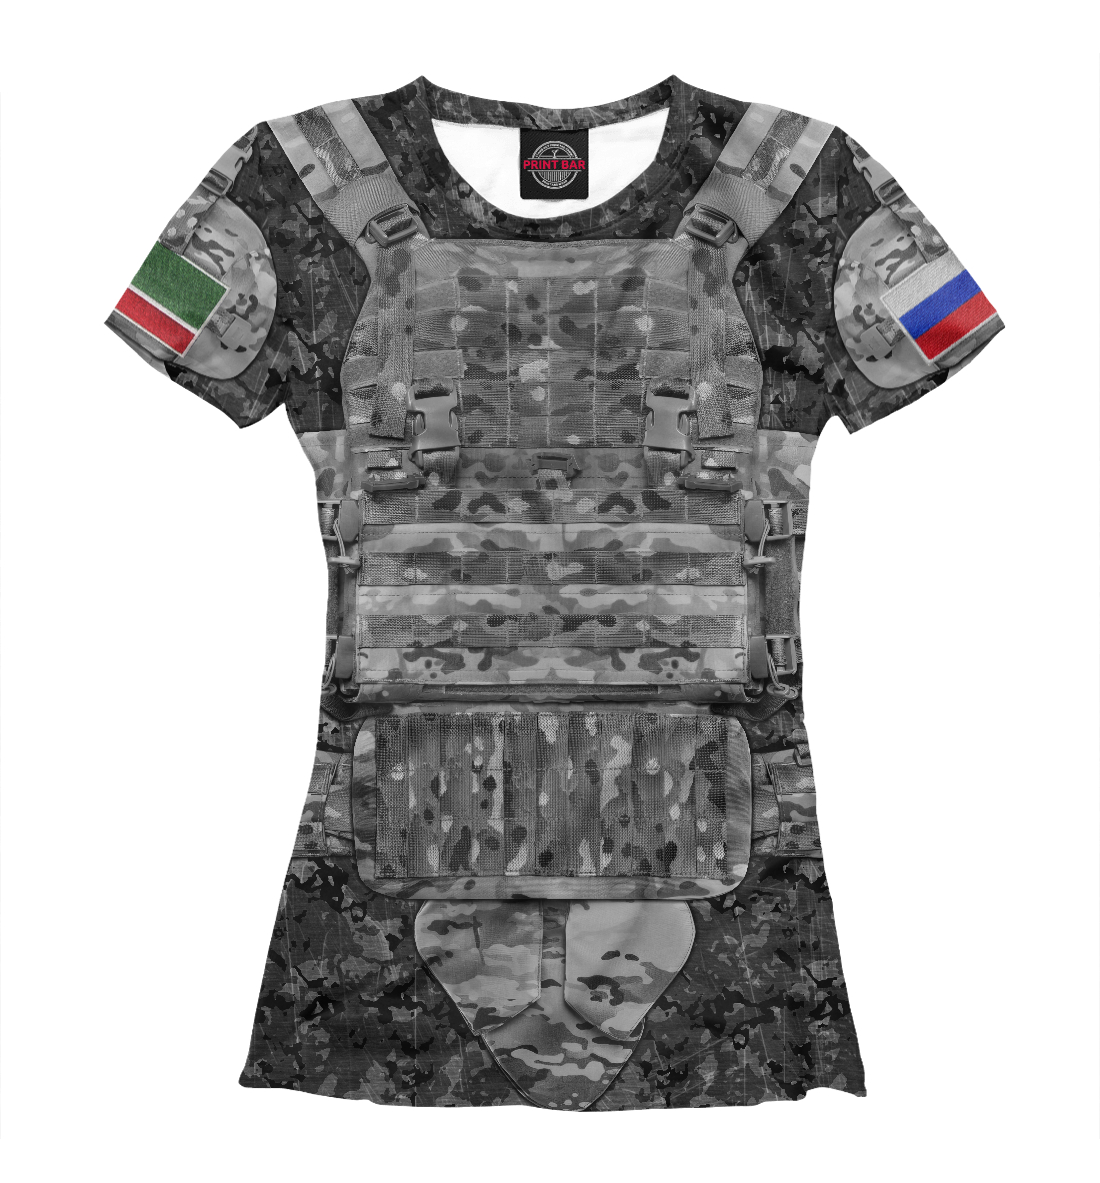 Футболка Чеченский Батальон для девочек, артикул: BLV-874854-fut-1mp